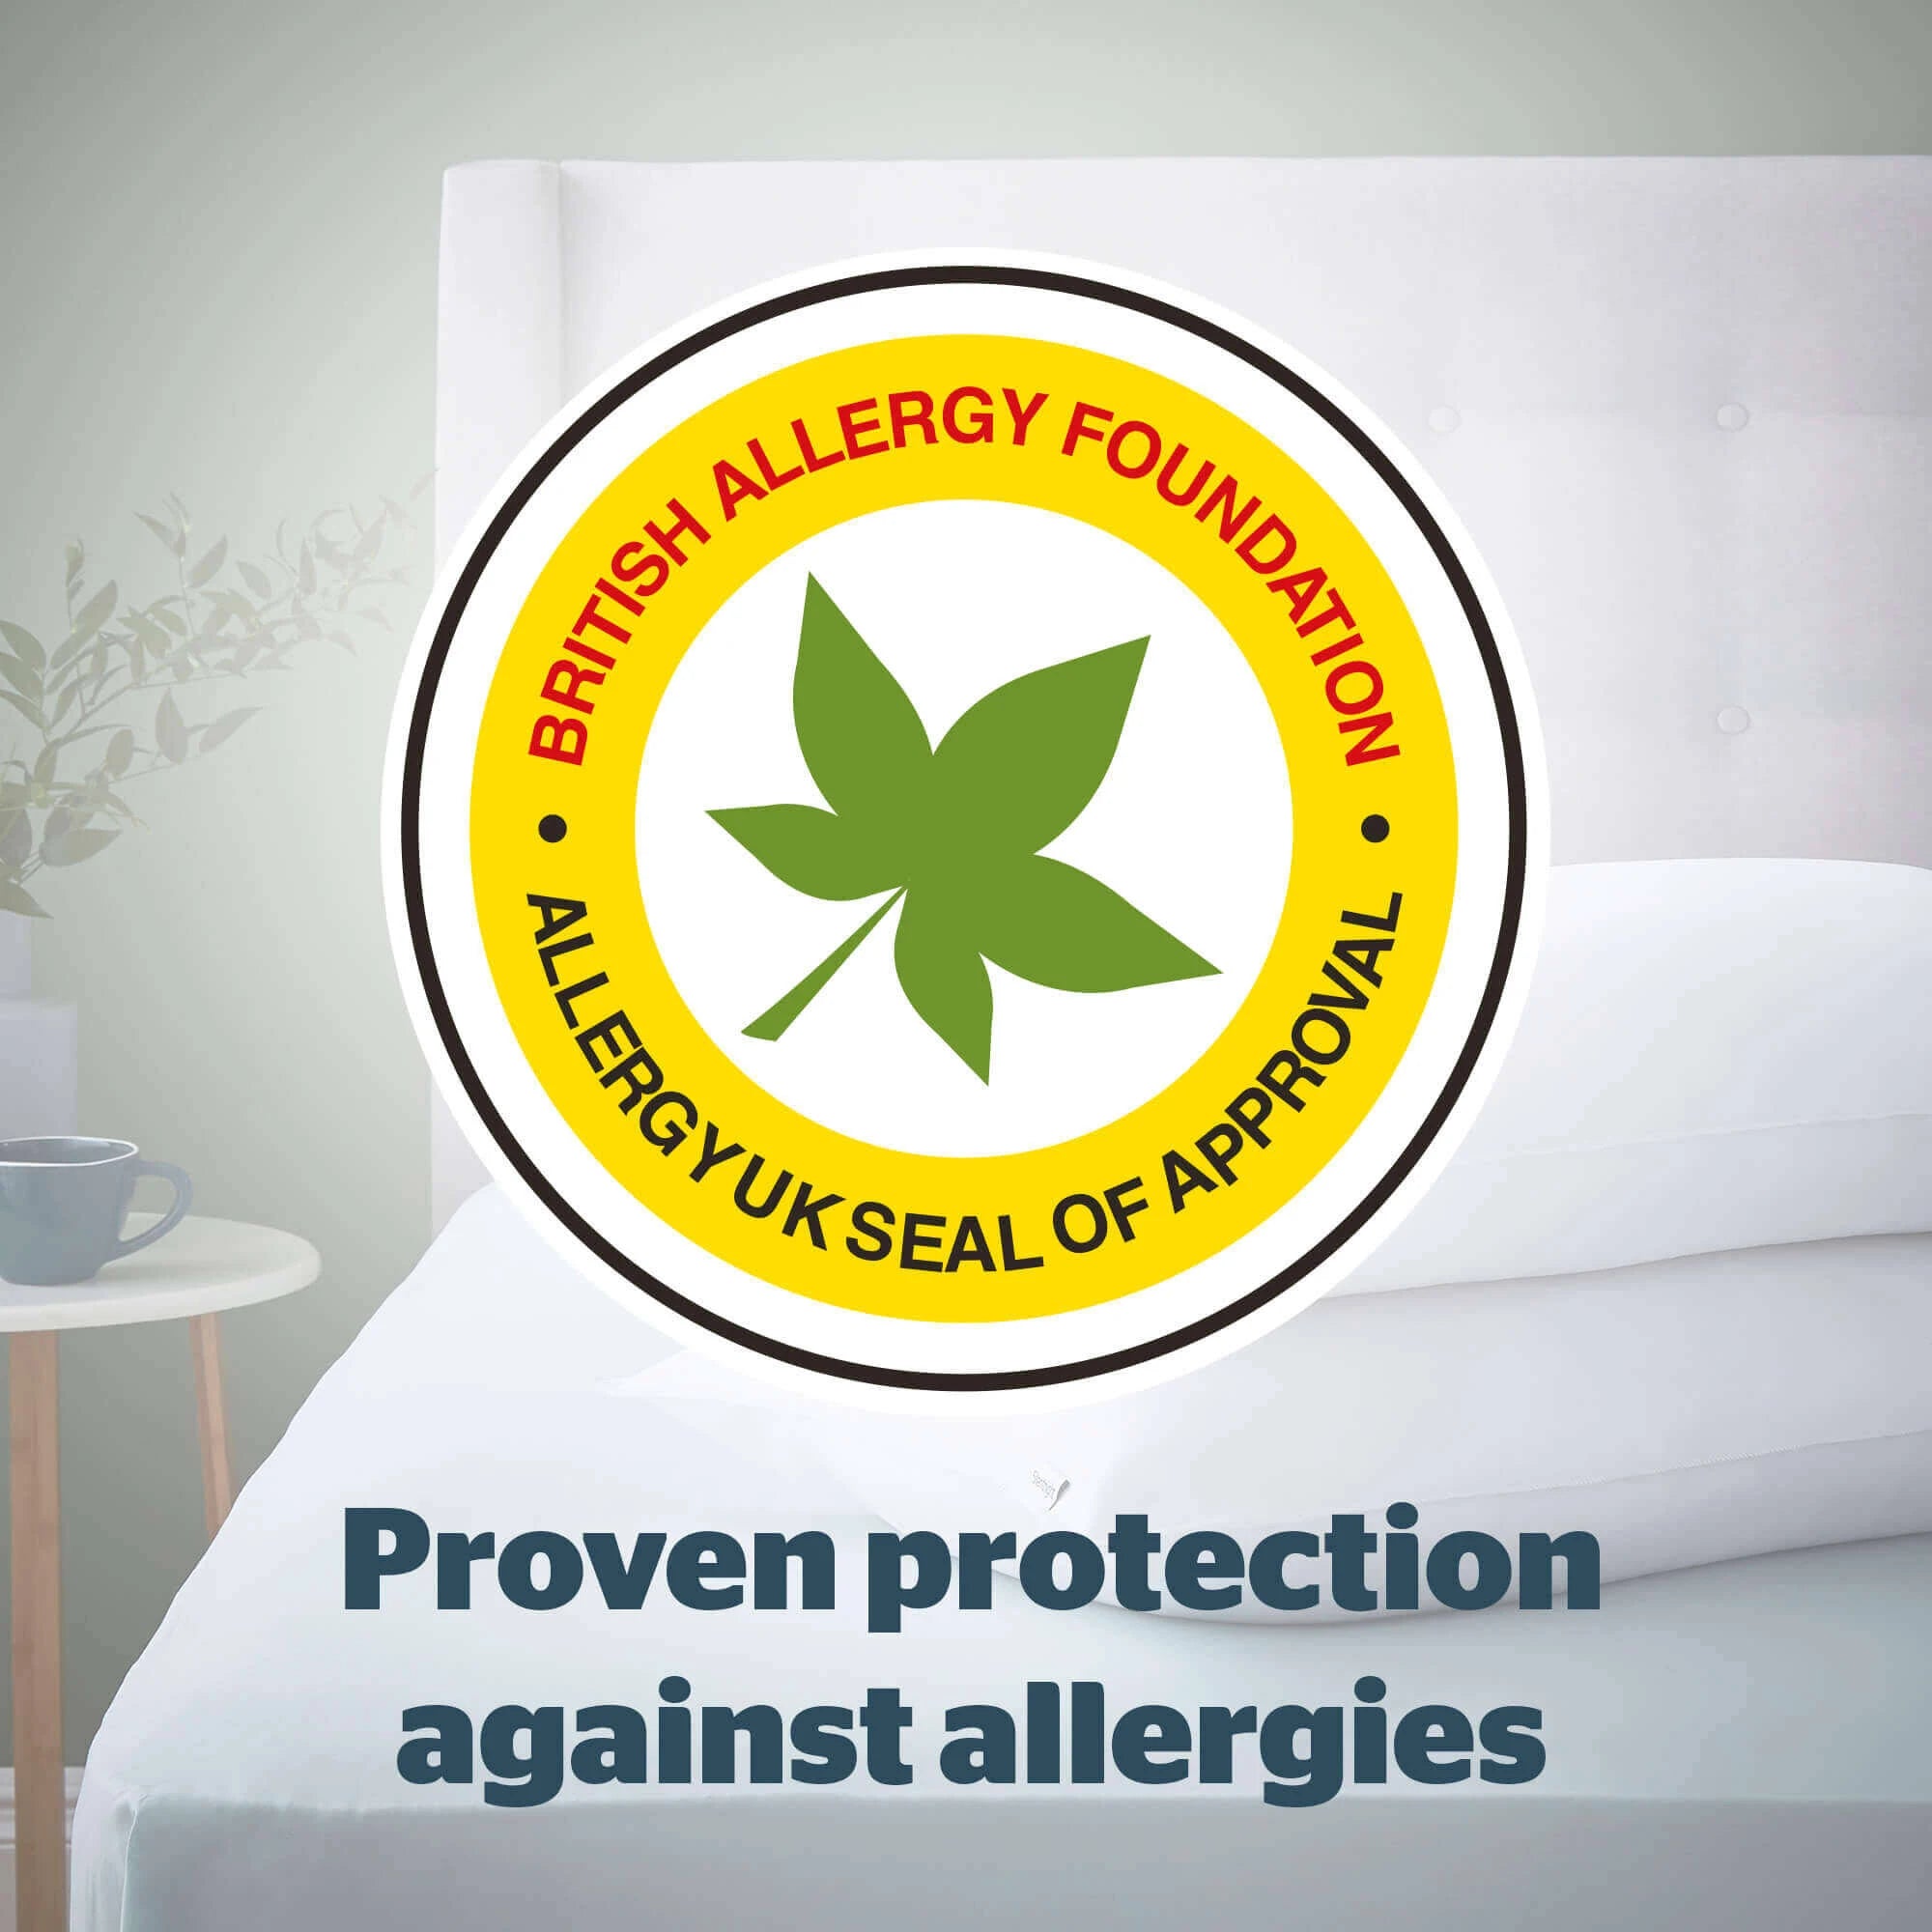 Silentnight Anti-Allergy Pillow - Pack of 2